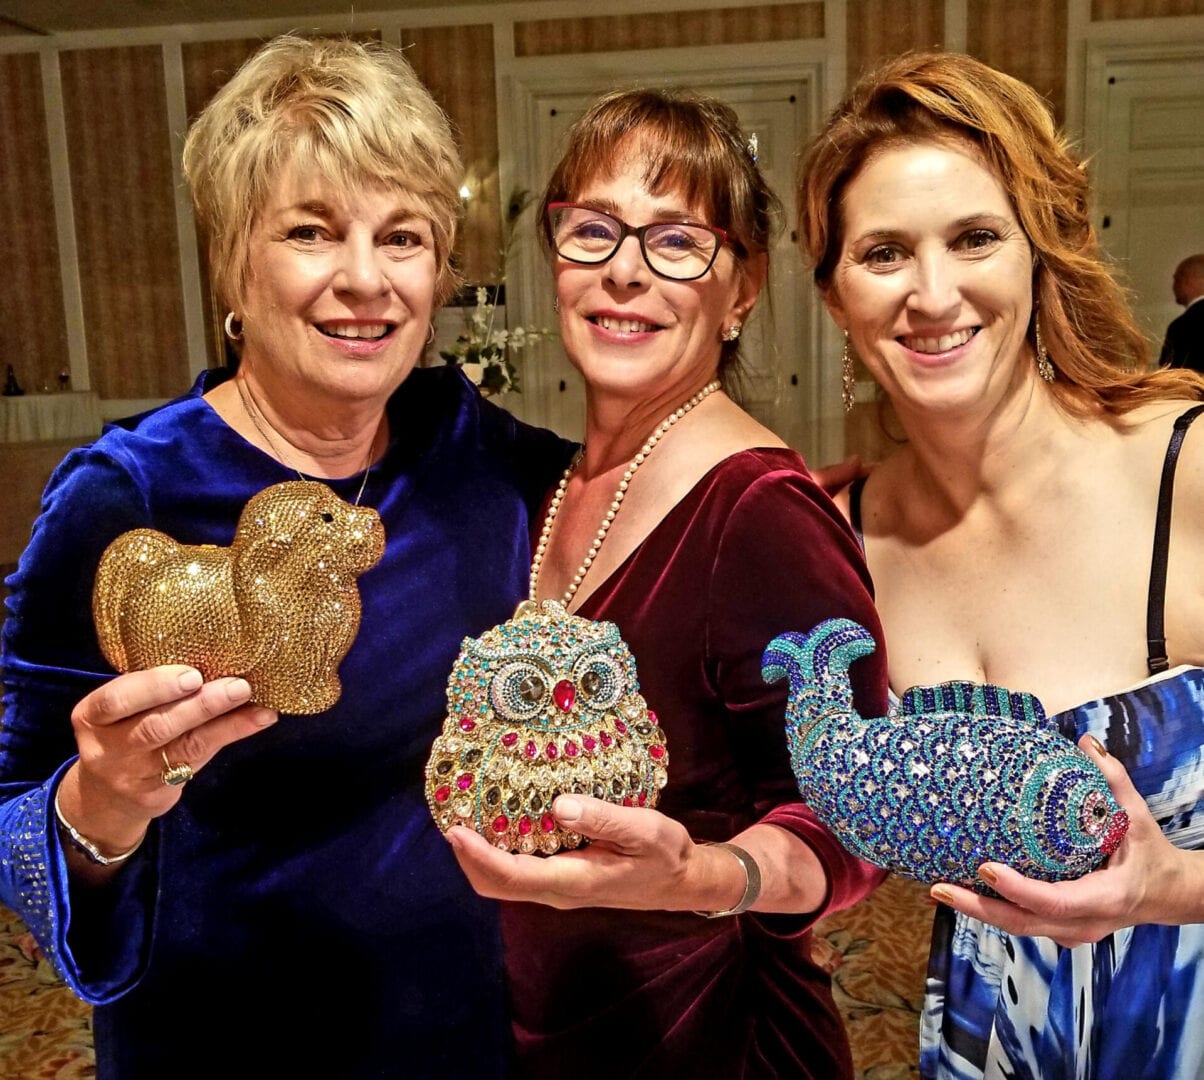 group photo of women holding three Swarovski crystal purses